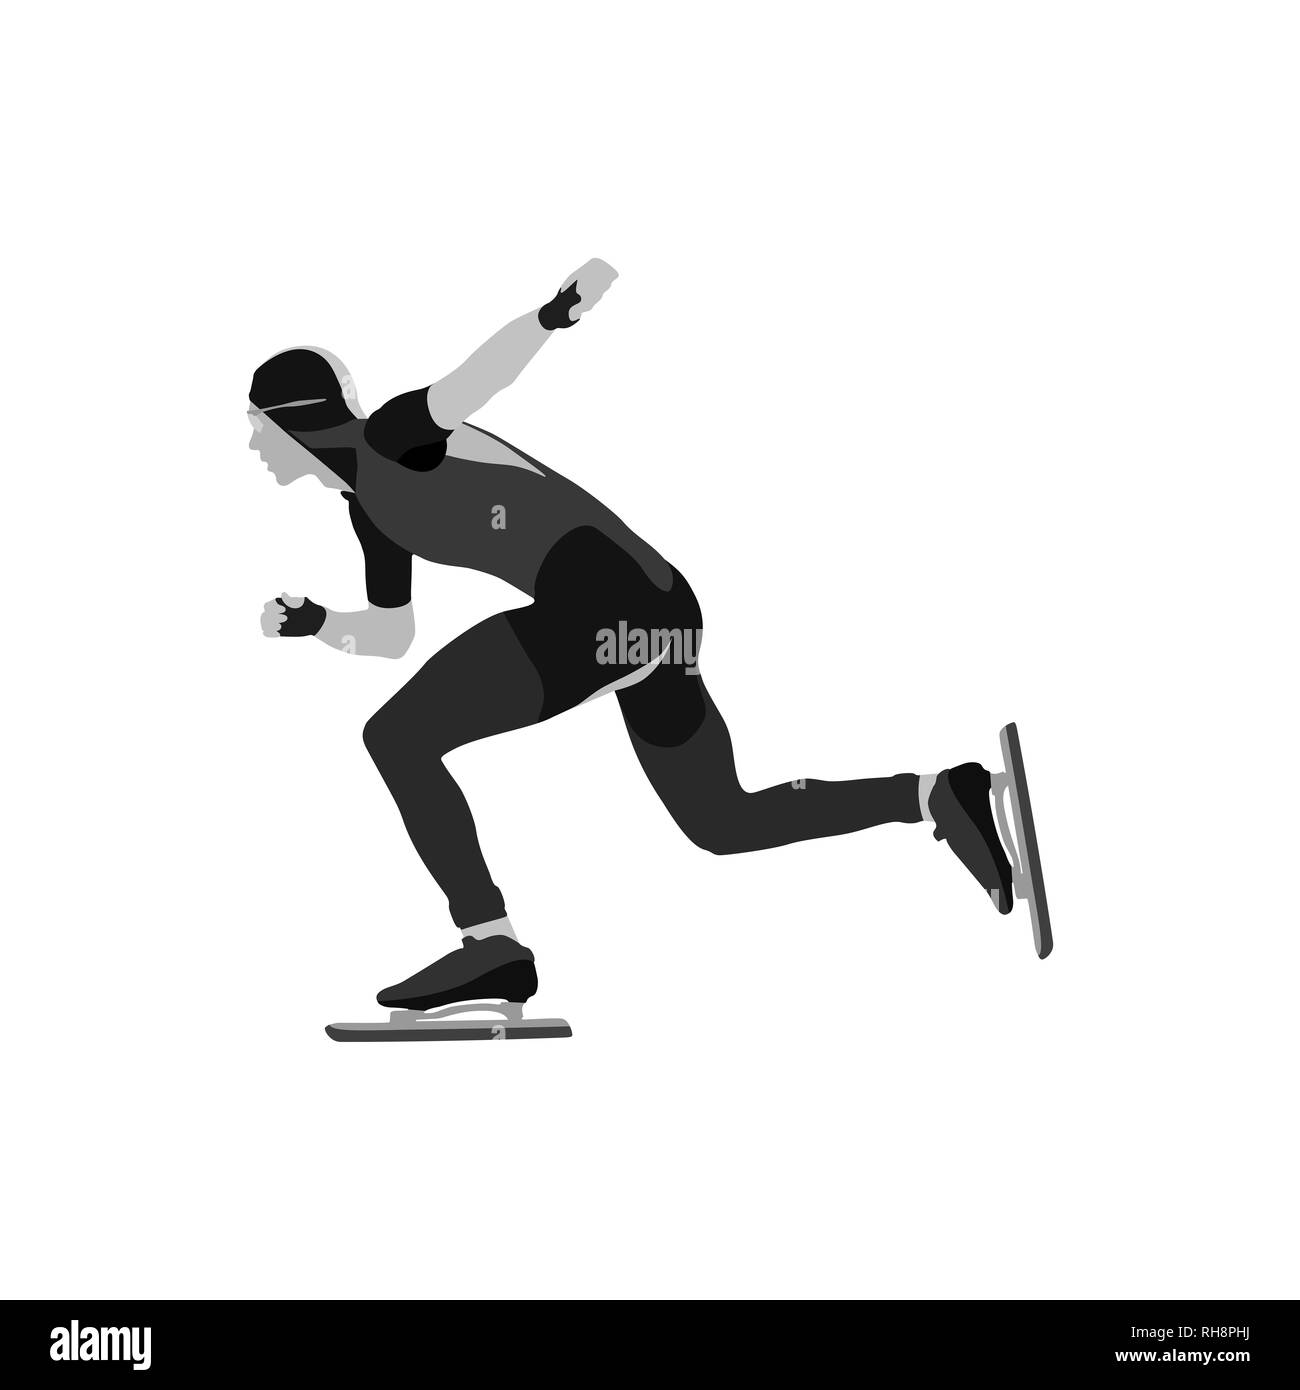 athlete speed skater black and white silhouette Stock Photo